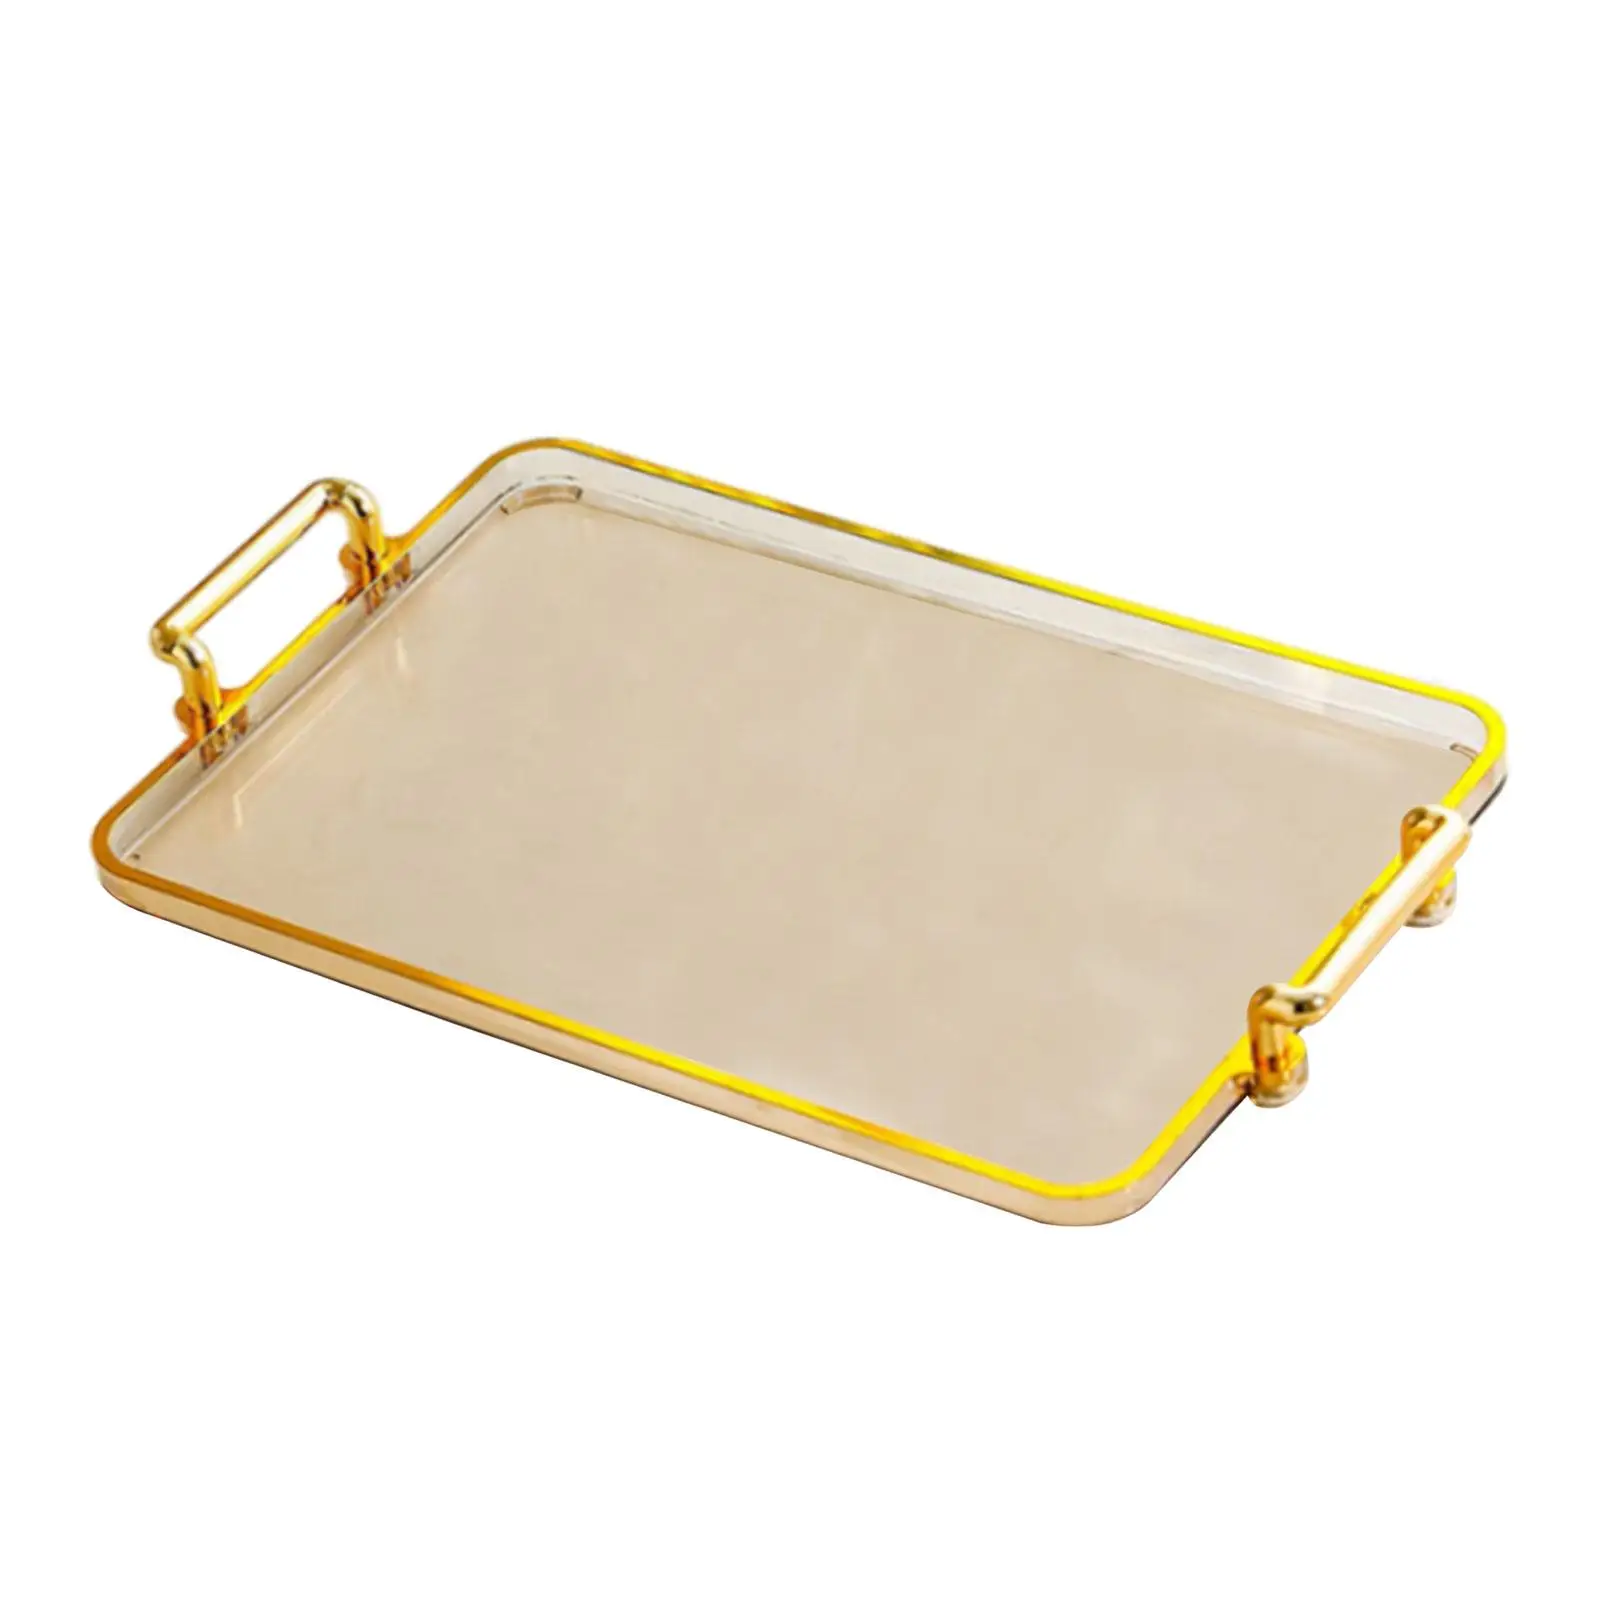 Serving Tray Serving Platter Decorative Platter Food Trays Housewarming Gift